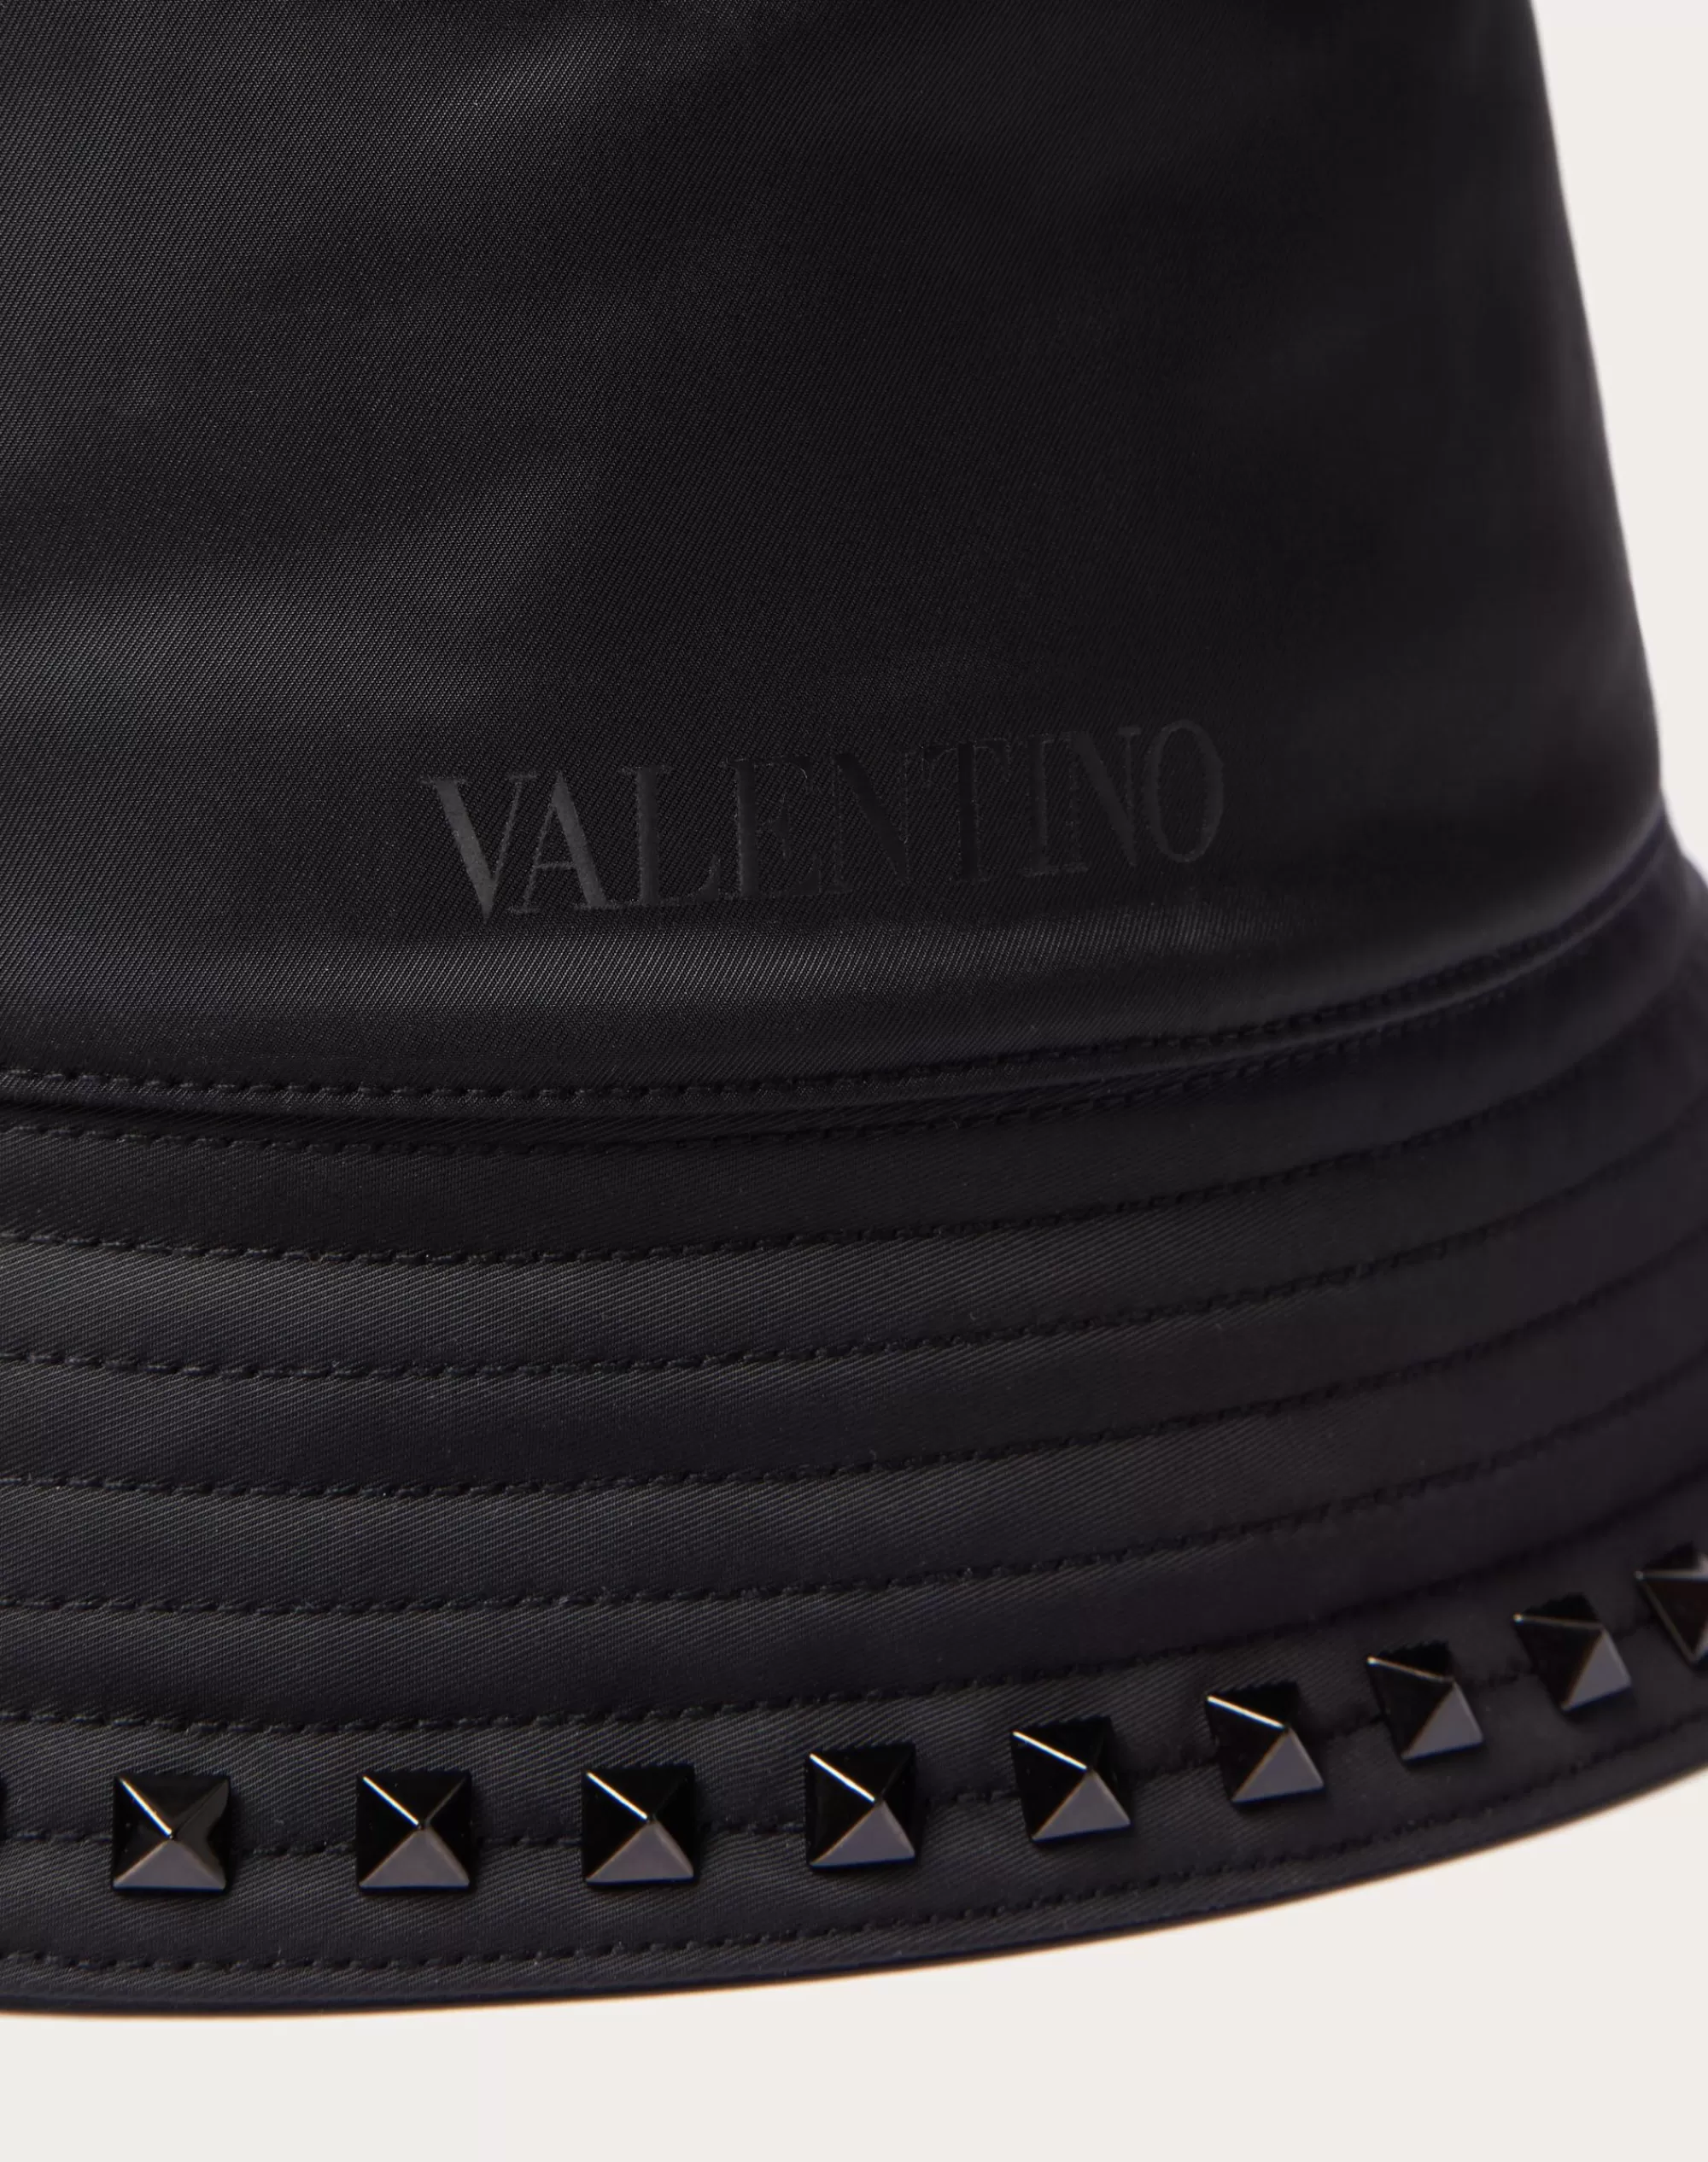 Valentino UNTITLED BUCKET HAT   Black New